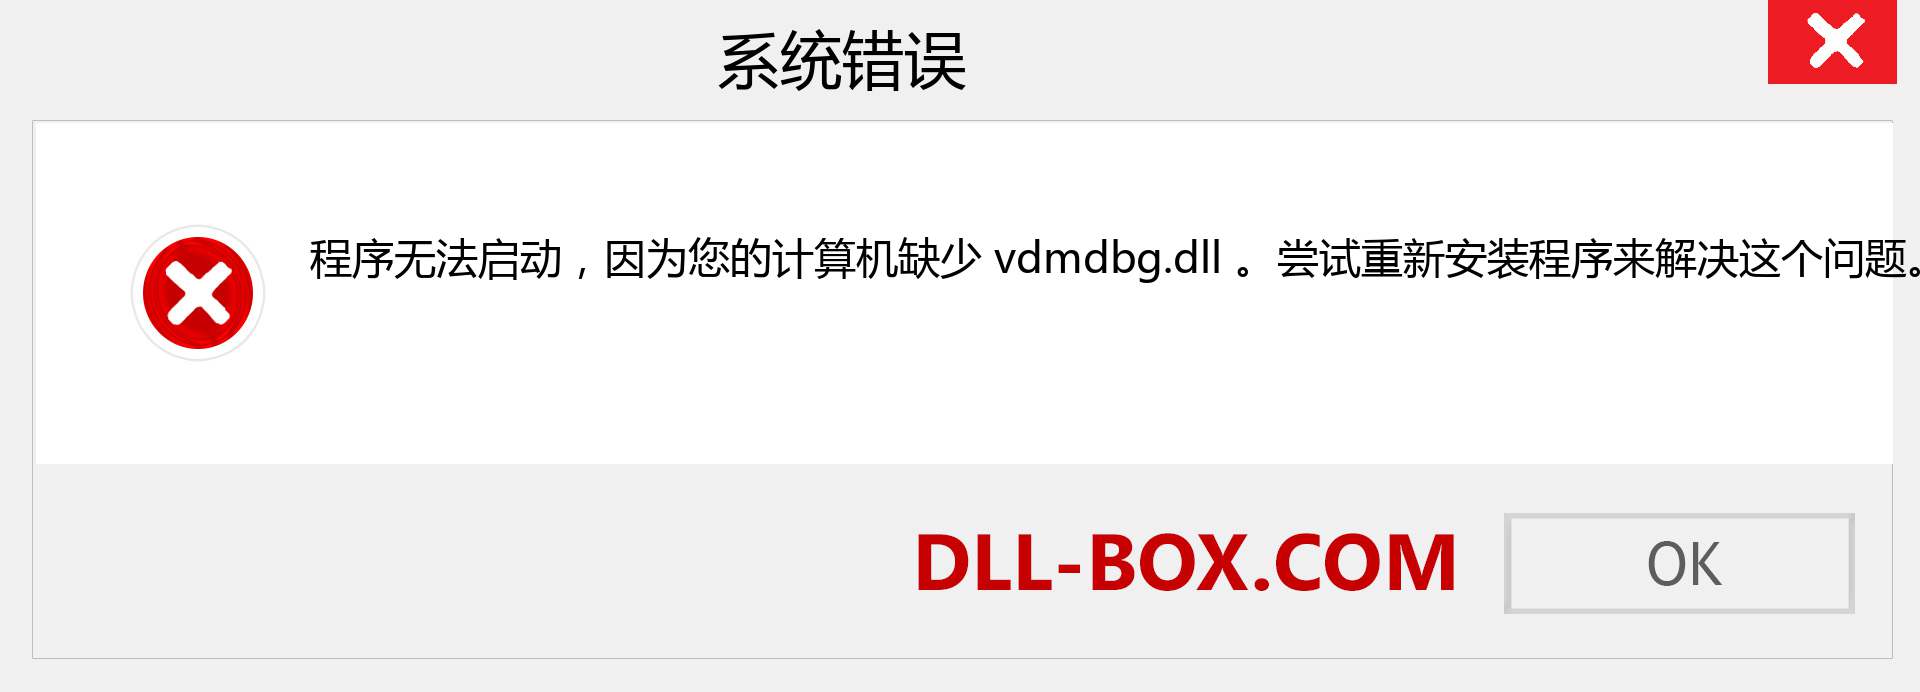 vdmdbg.dll 文件丢失？。 适用于 Windows 7、8、10 的下载 - 修复 Windows、照片、图像上的 vdmdbg dll 丢失错误